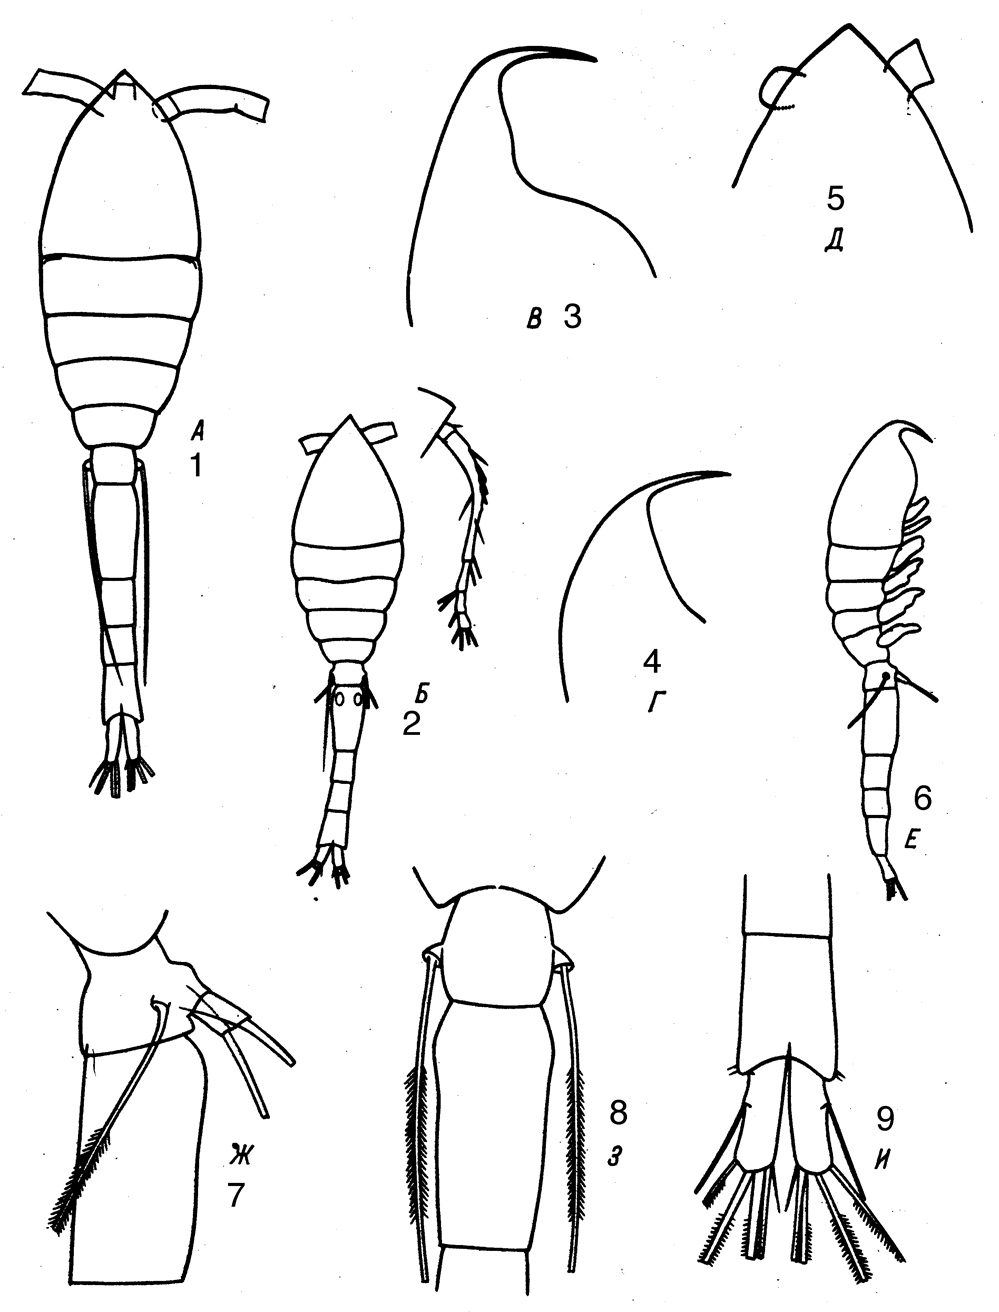 Species Oithona robusta - Plate 6 of morphological figures